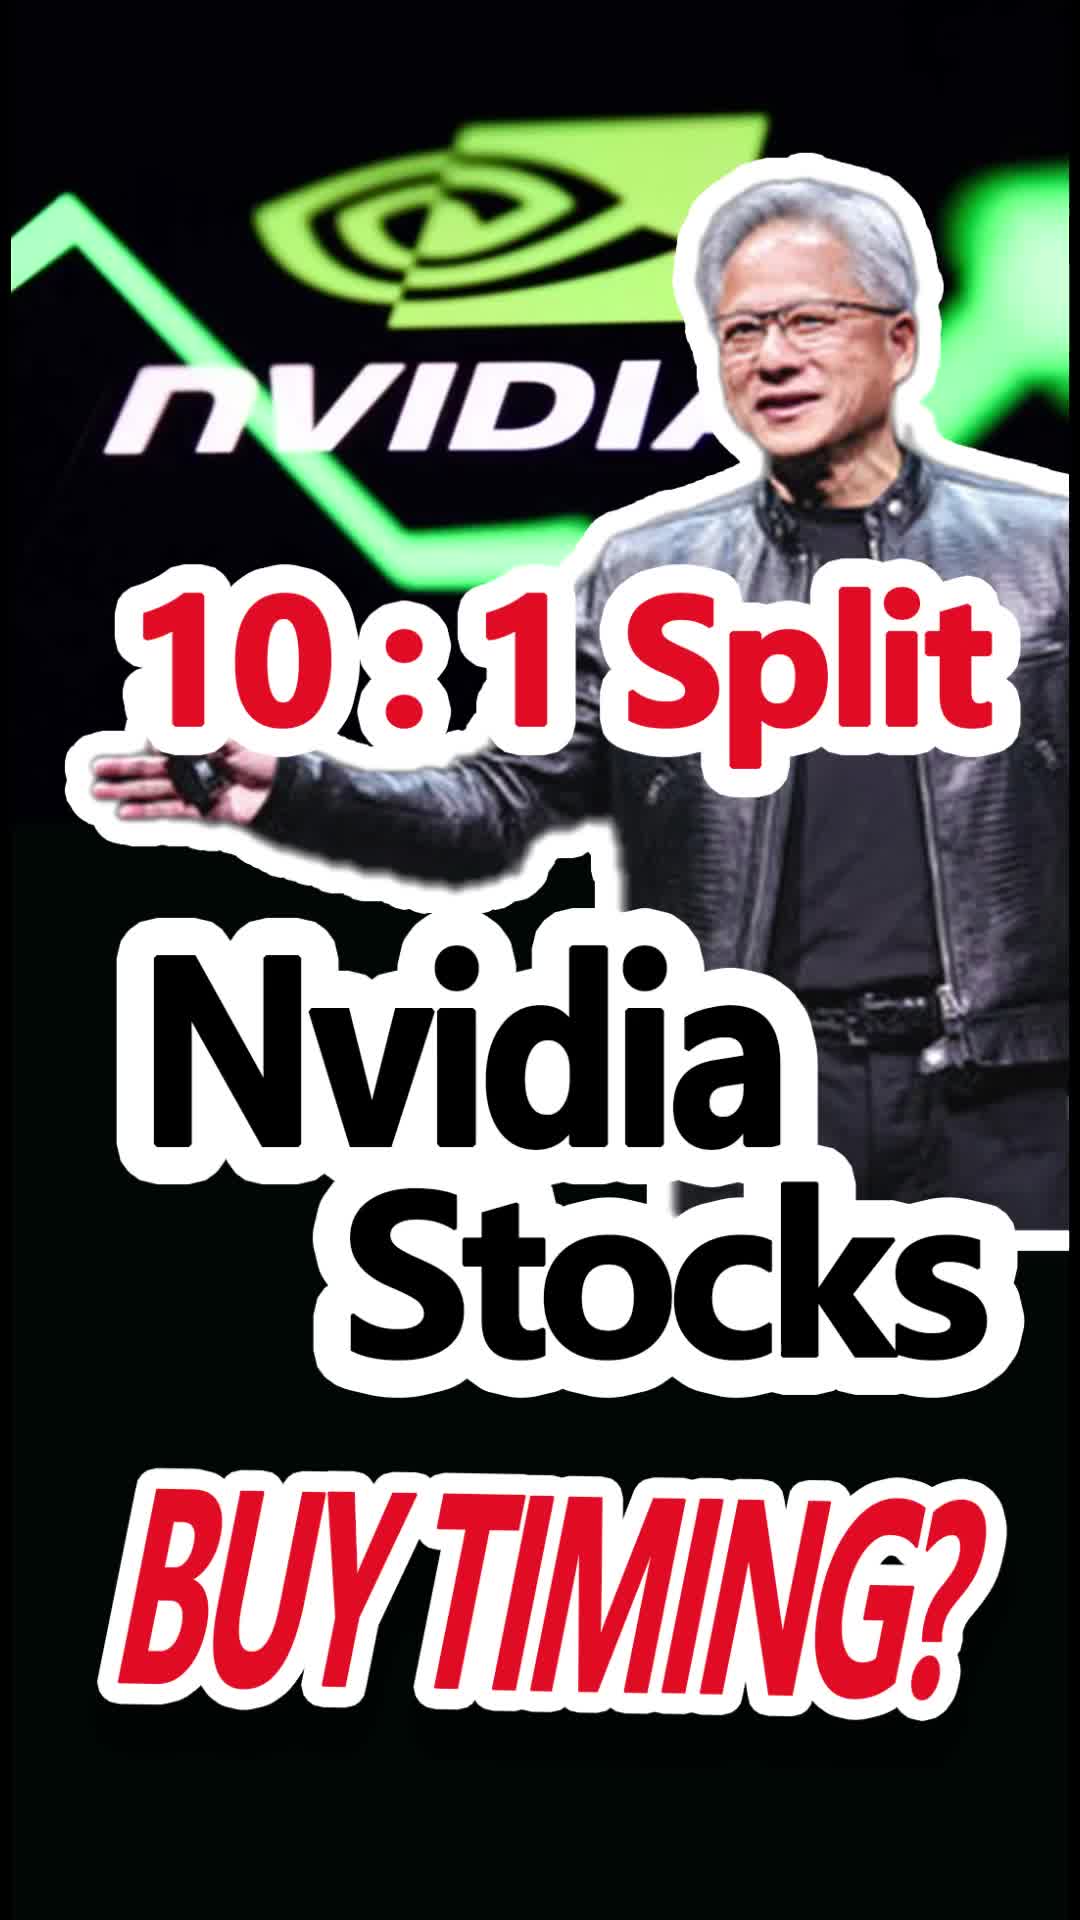 Before Split，Nvidia Stock Buy Timing？